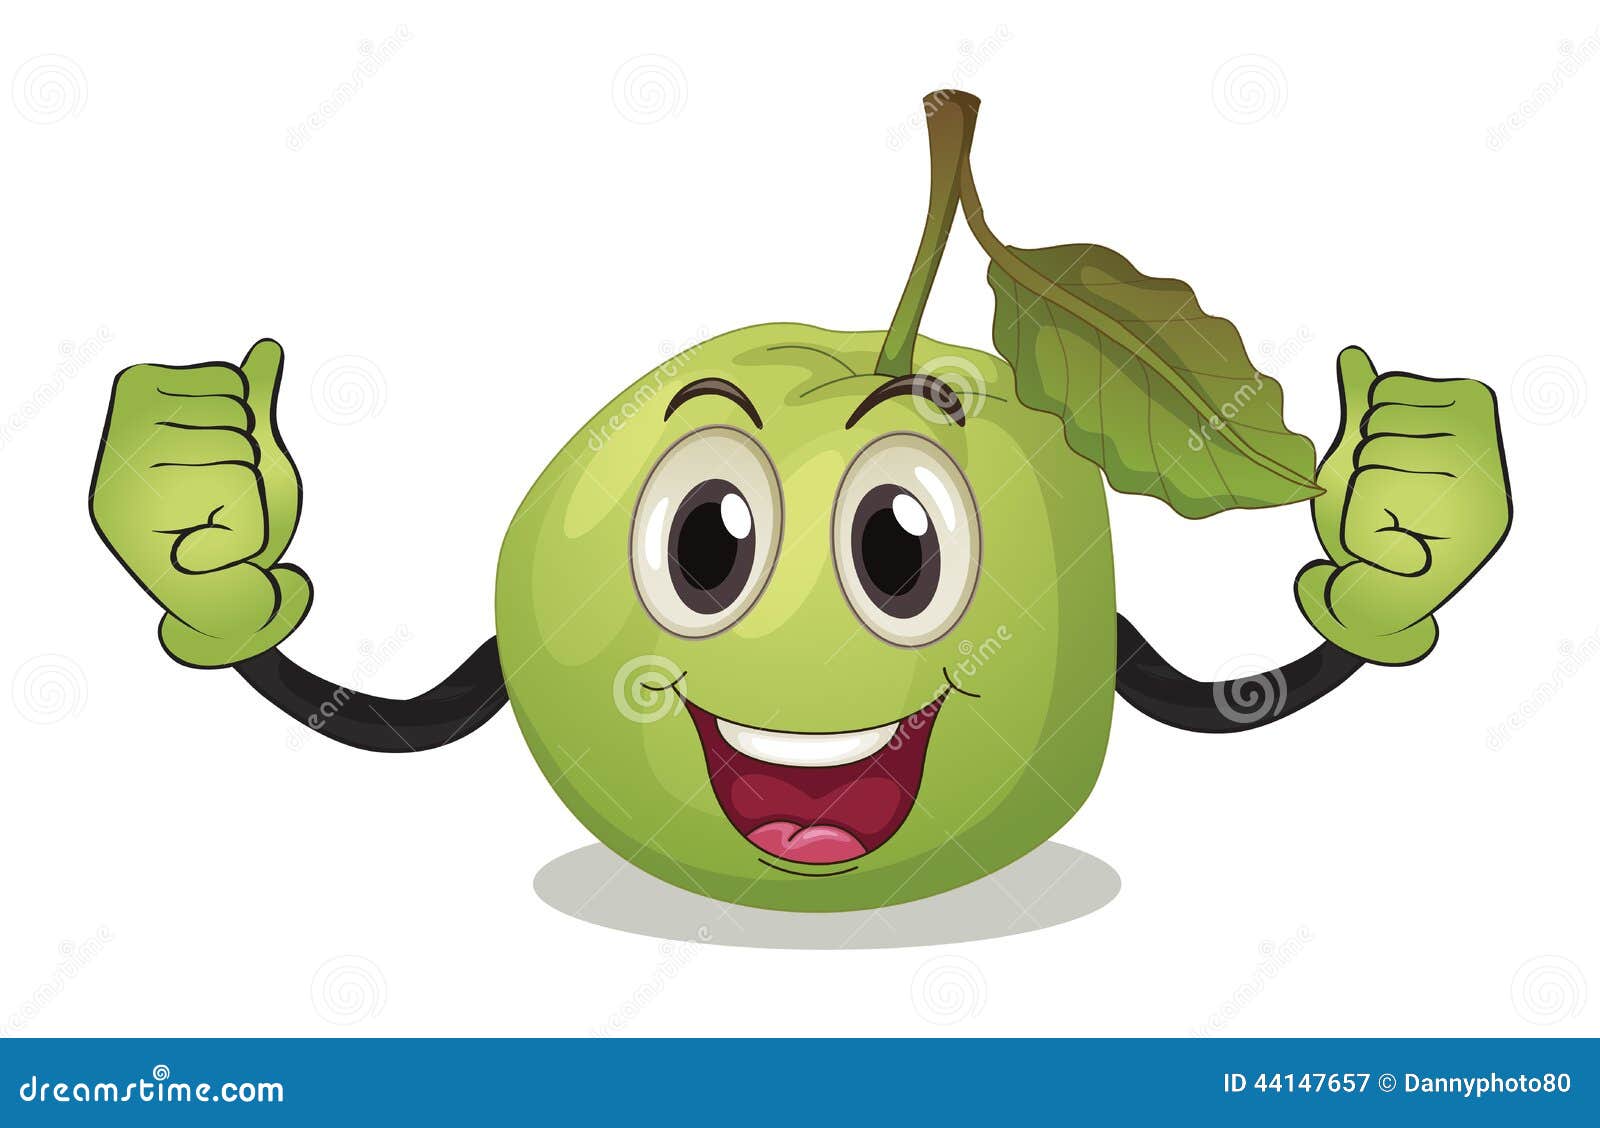 Guava stock vector. Illustration of green, organic, happy - 44147657